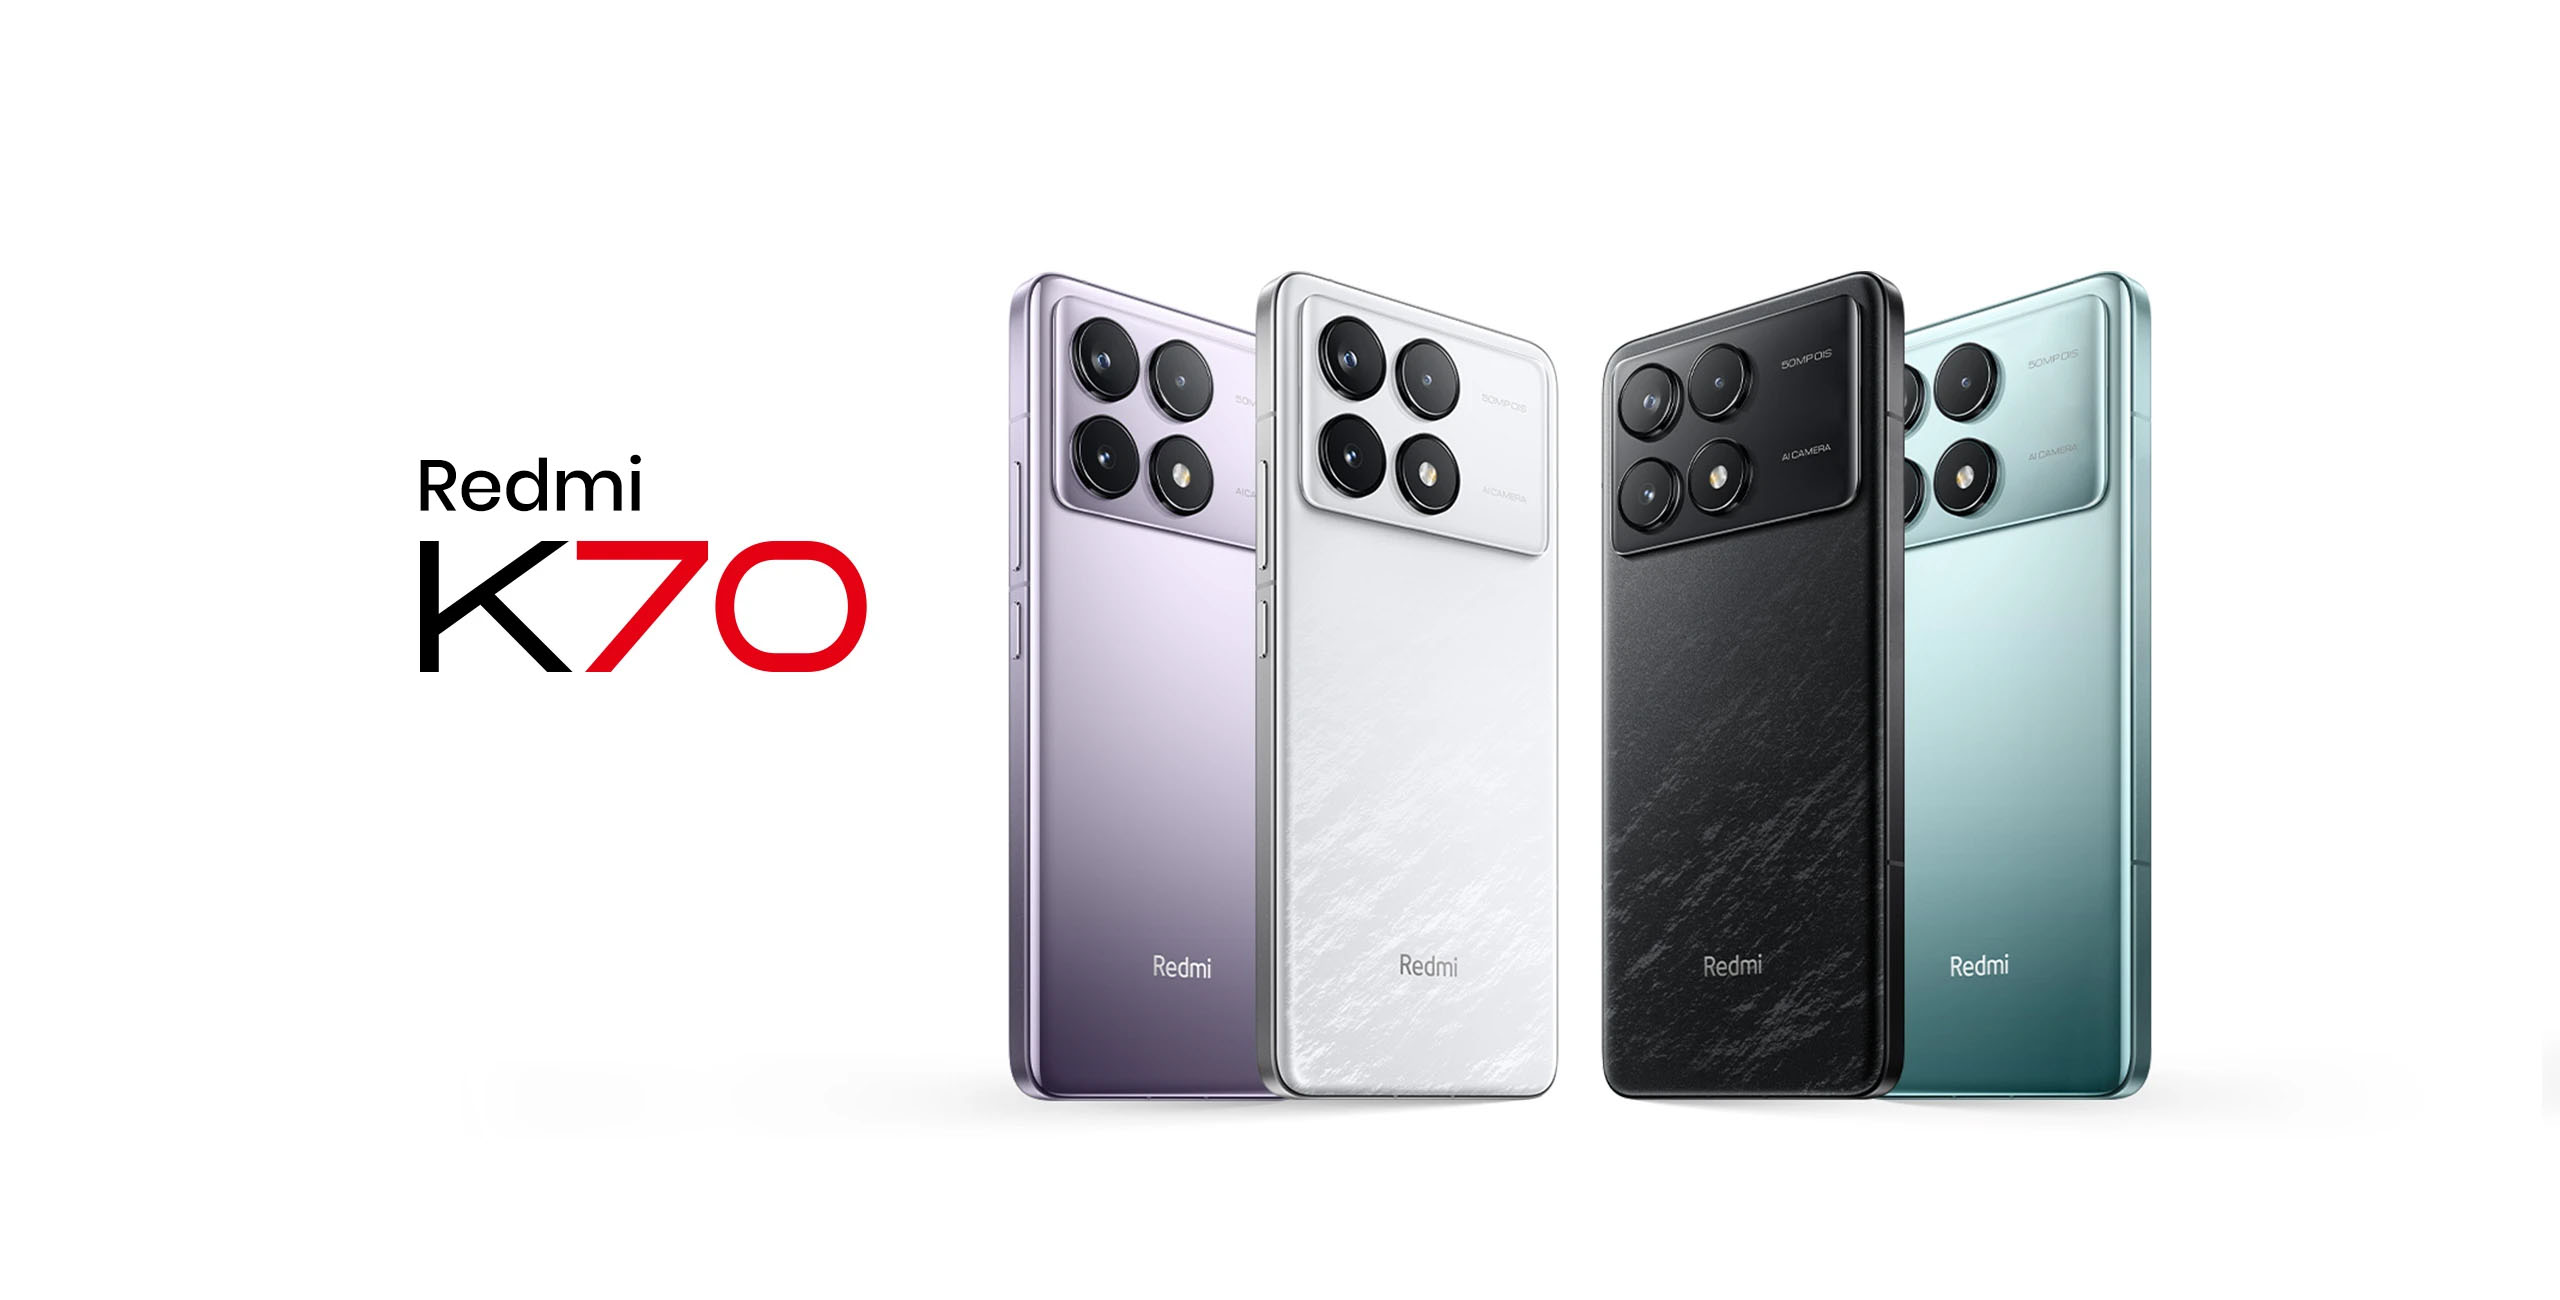 Redmi K70: Contender for the best mid-range smartphone